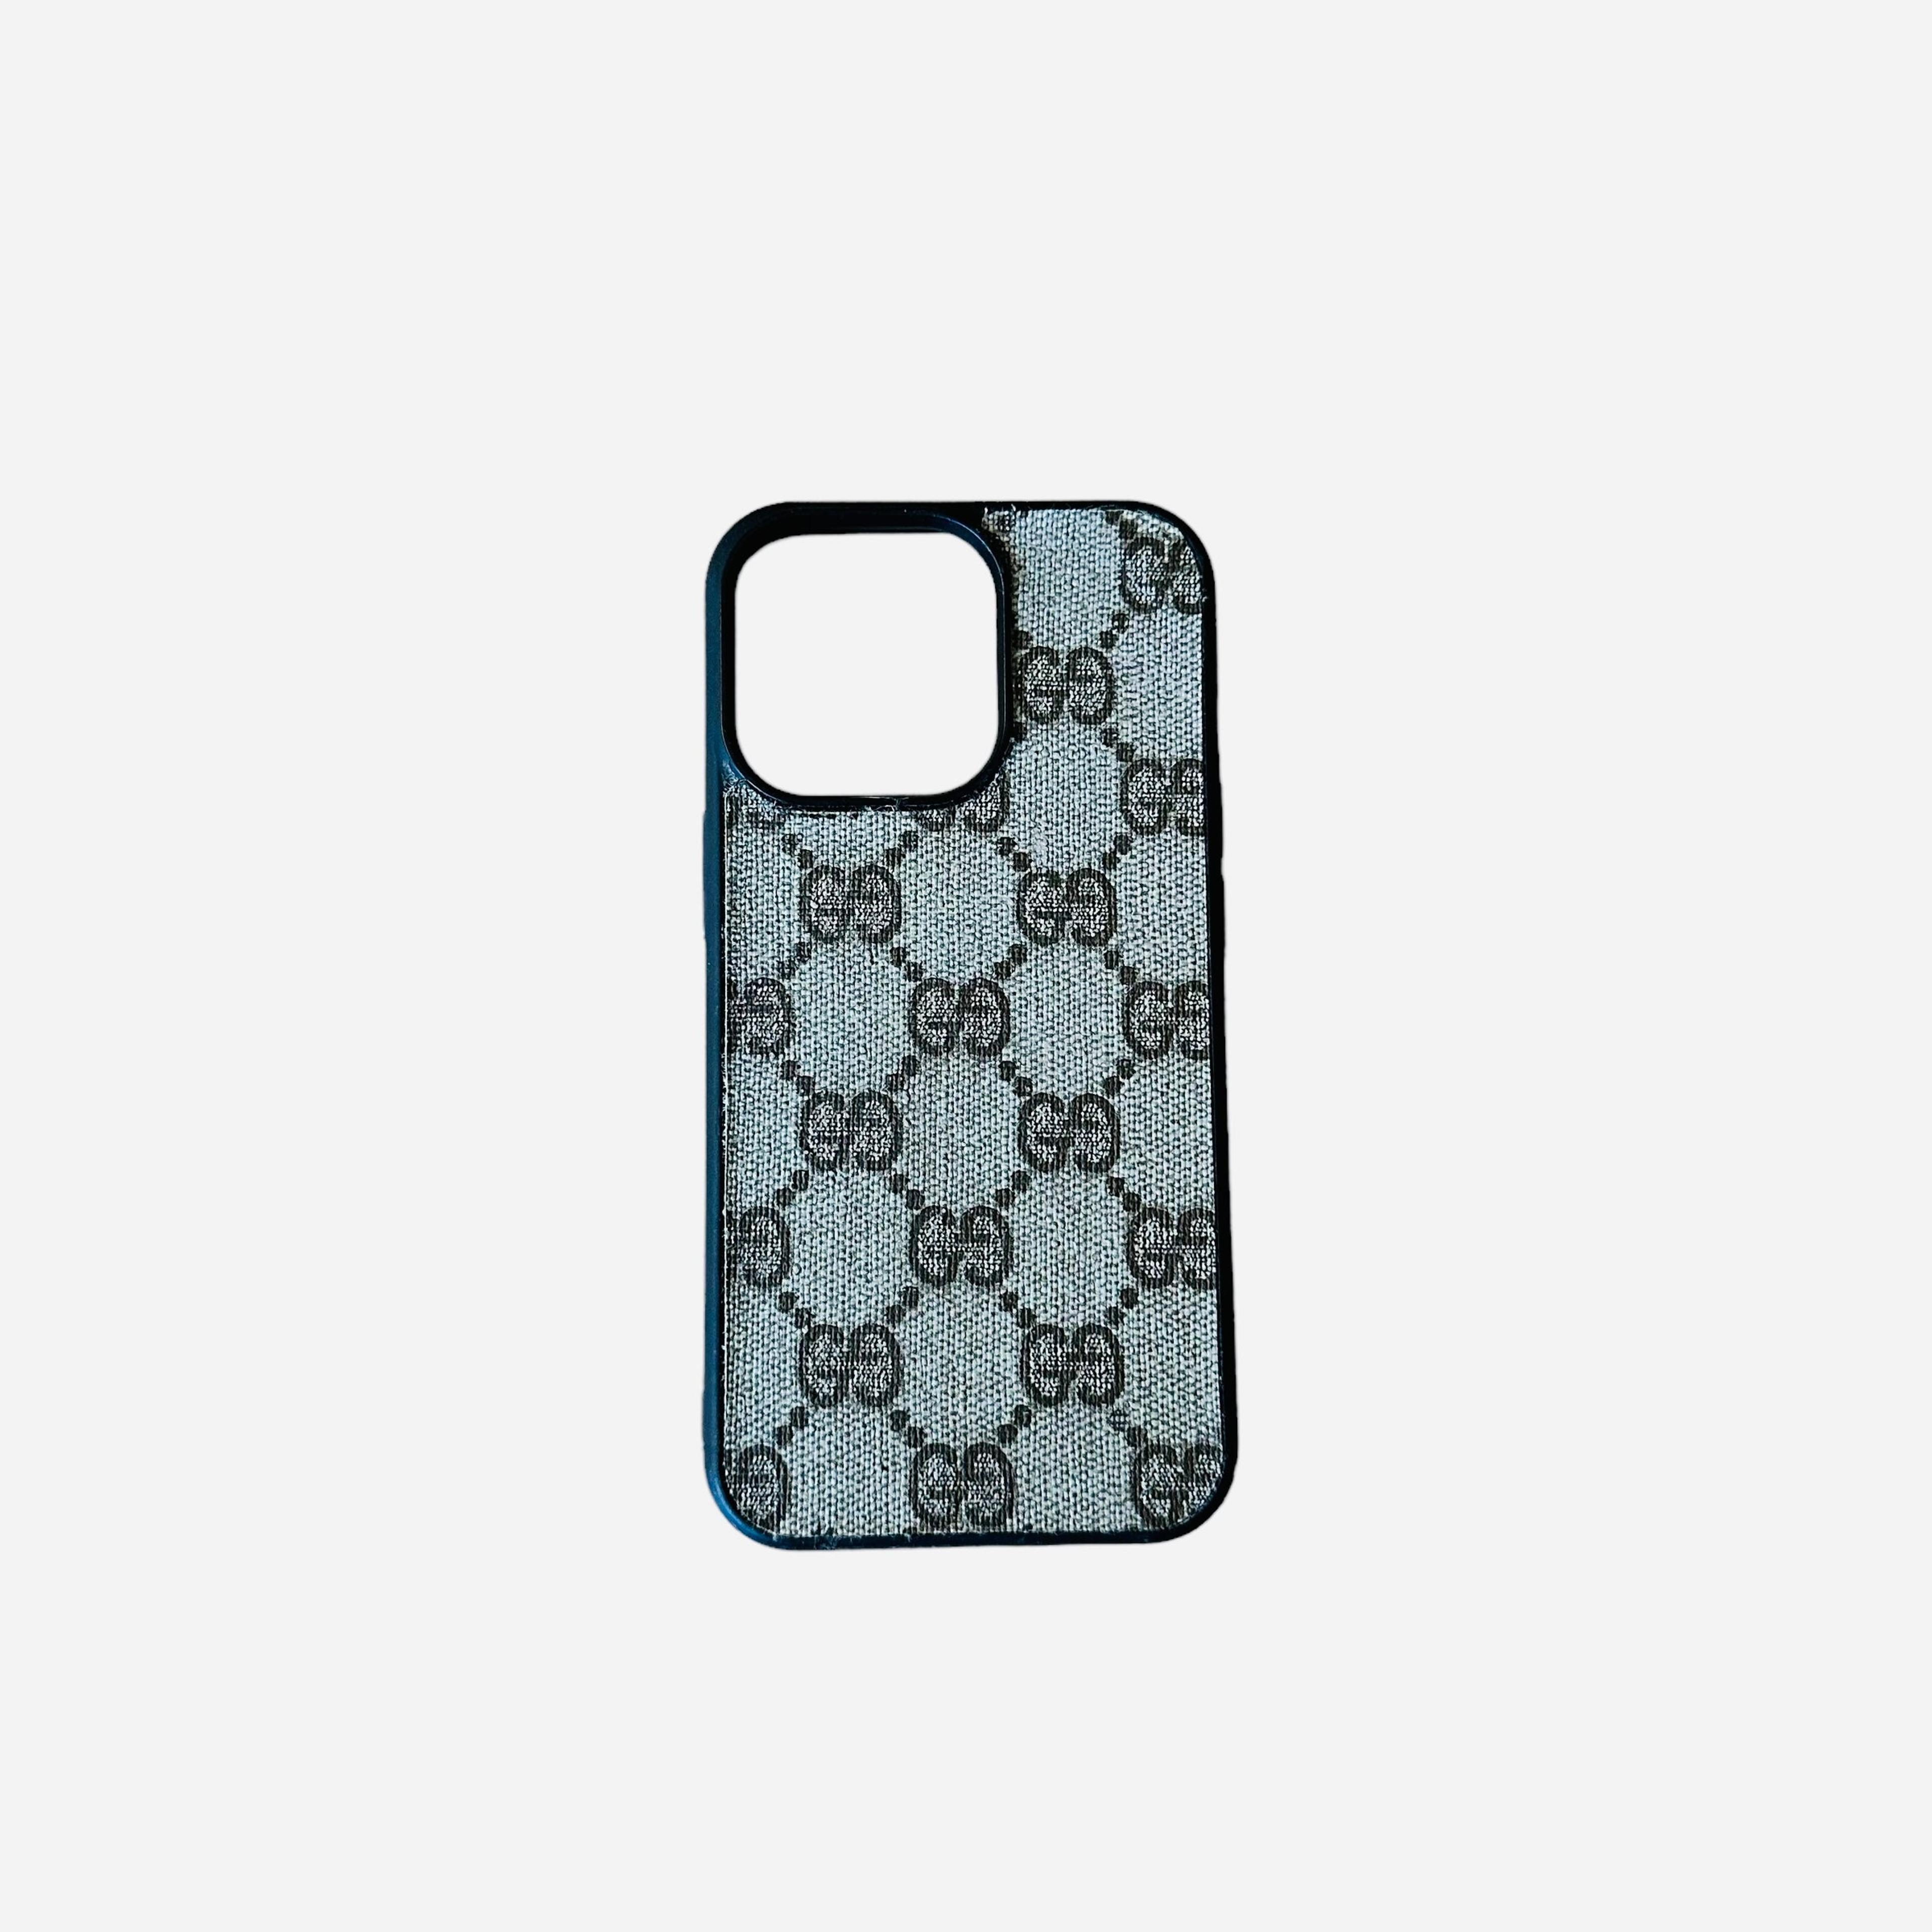 NTWRK - Gucci iPhone case (13 Pro)